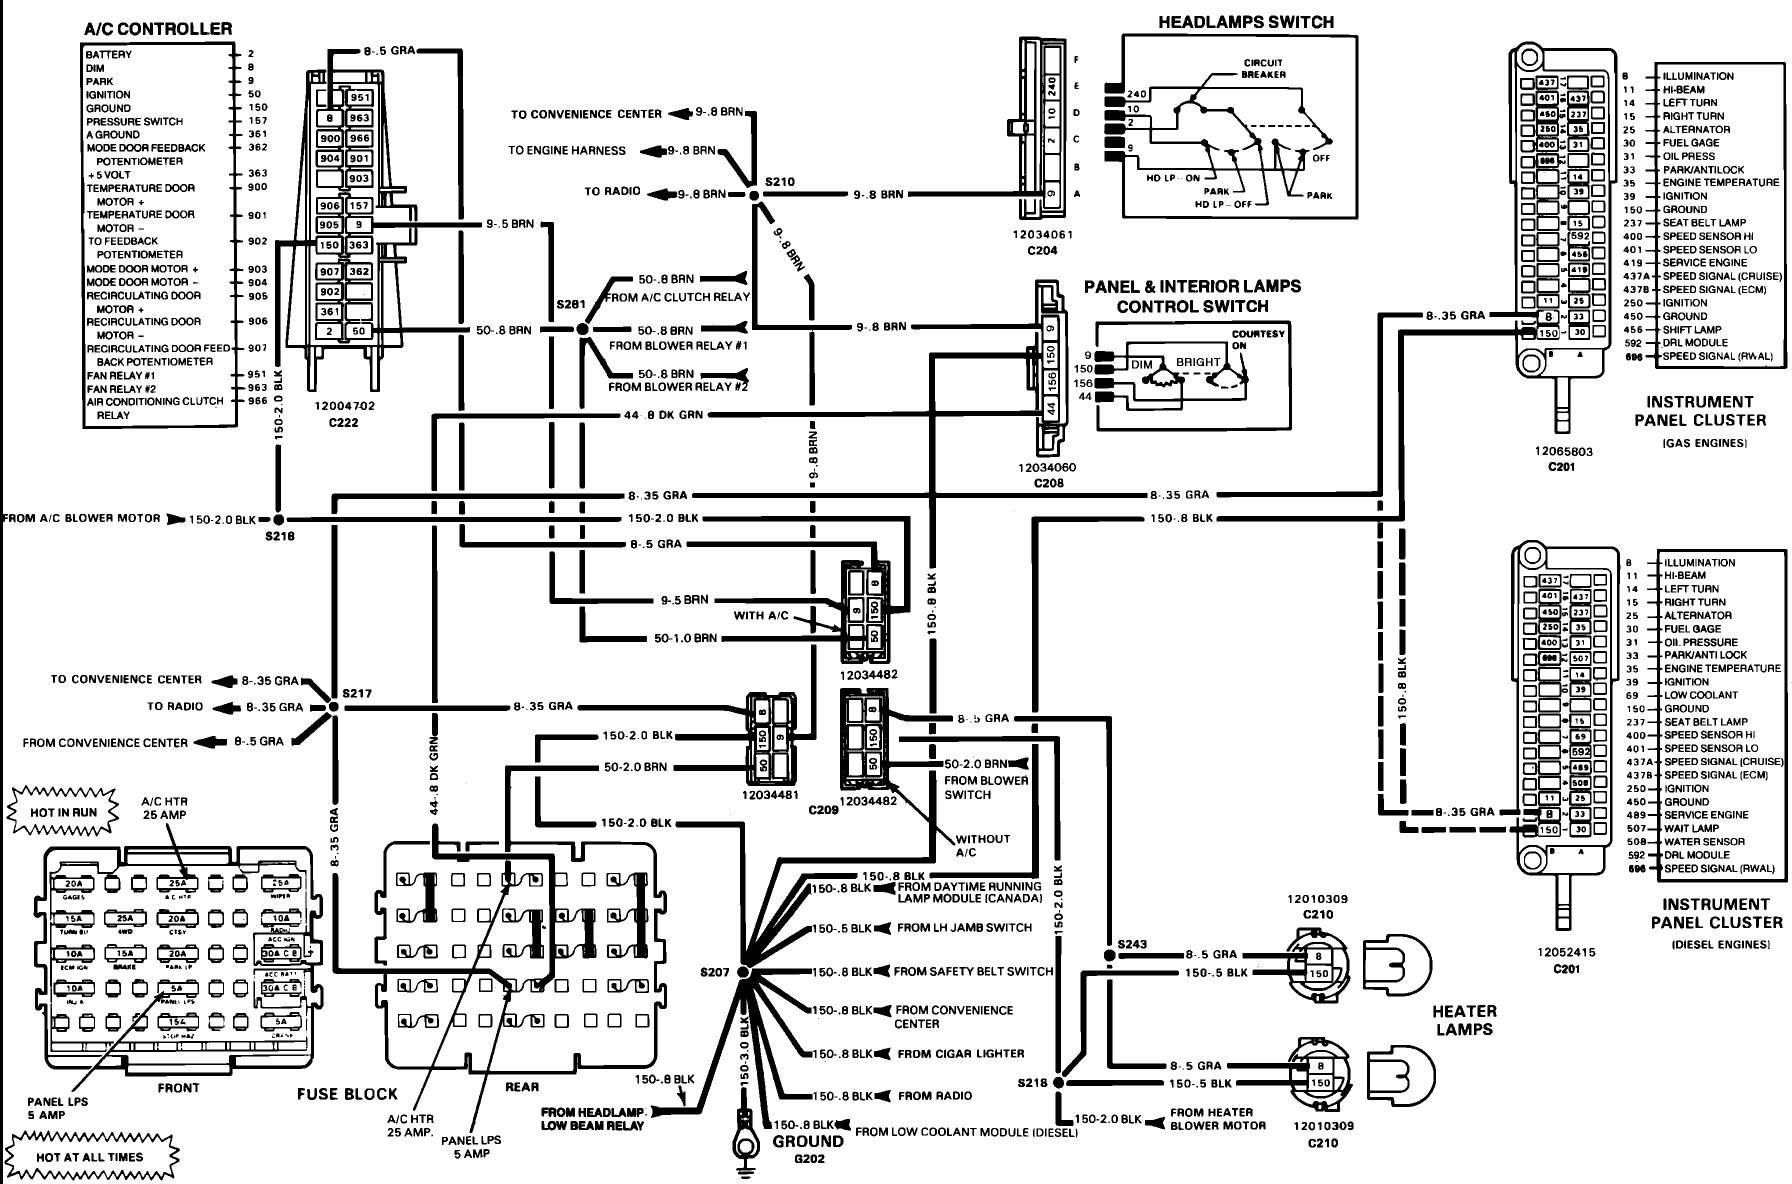 1990 Gm Ignition Switch Wiring Diagram from detoxicrecenze.com